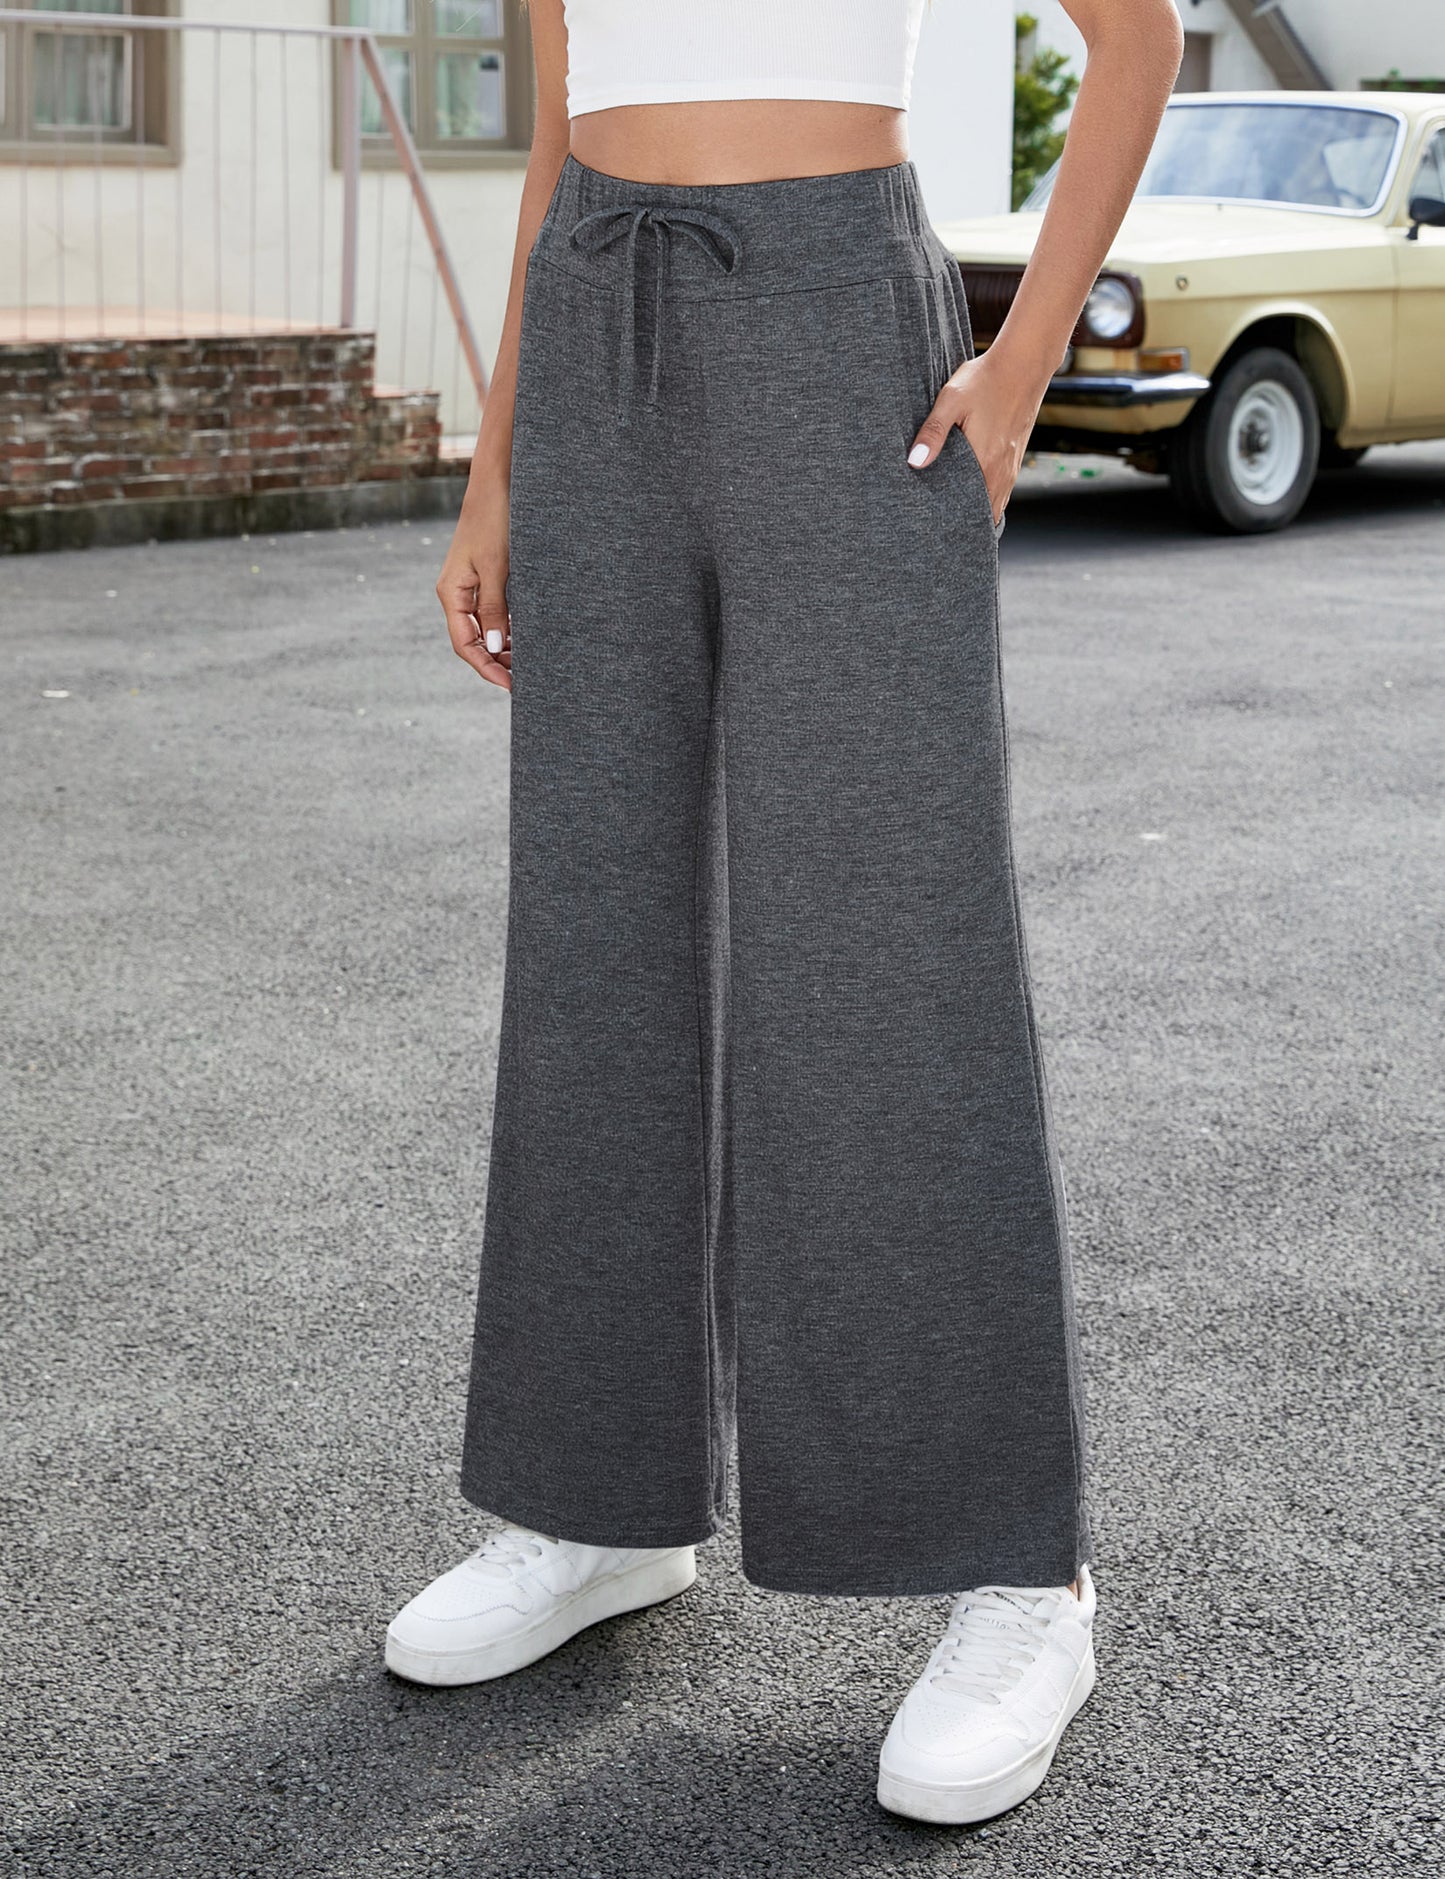 YESFASHION Women's Yoga Pants with Pockets Drawstring Pants Grey